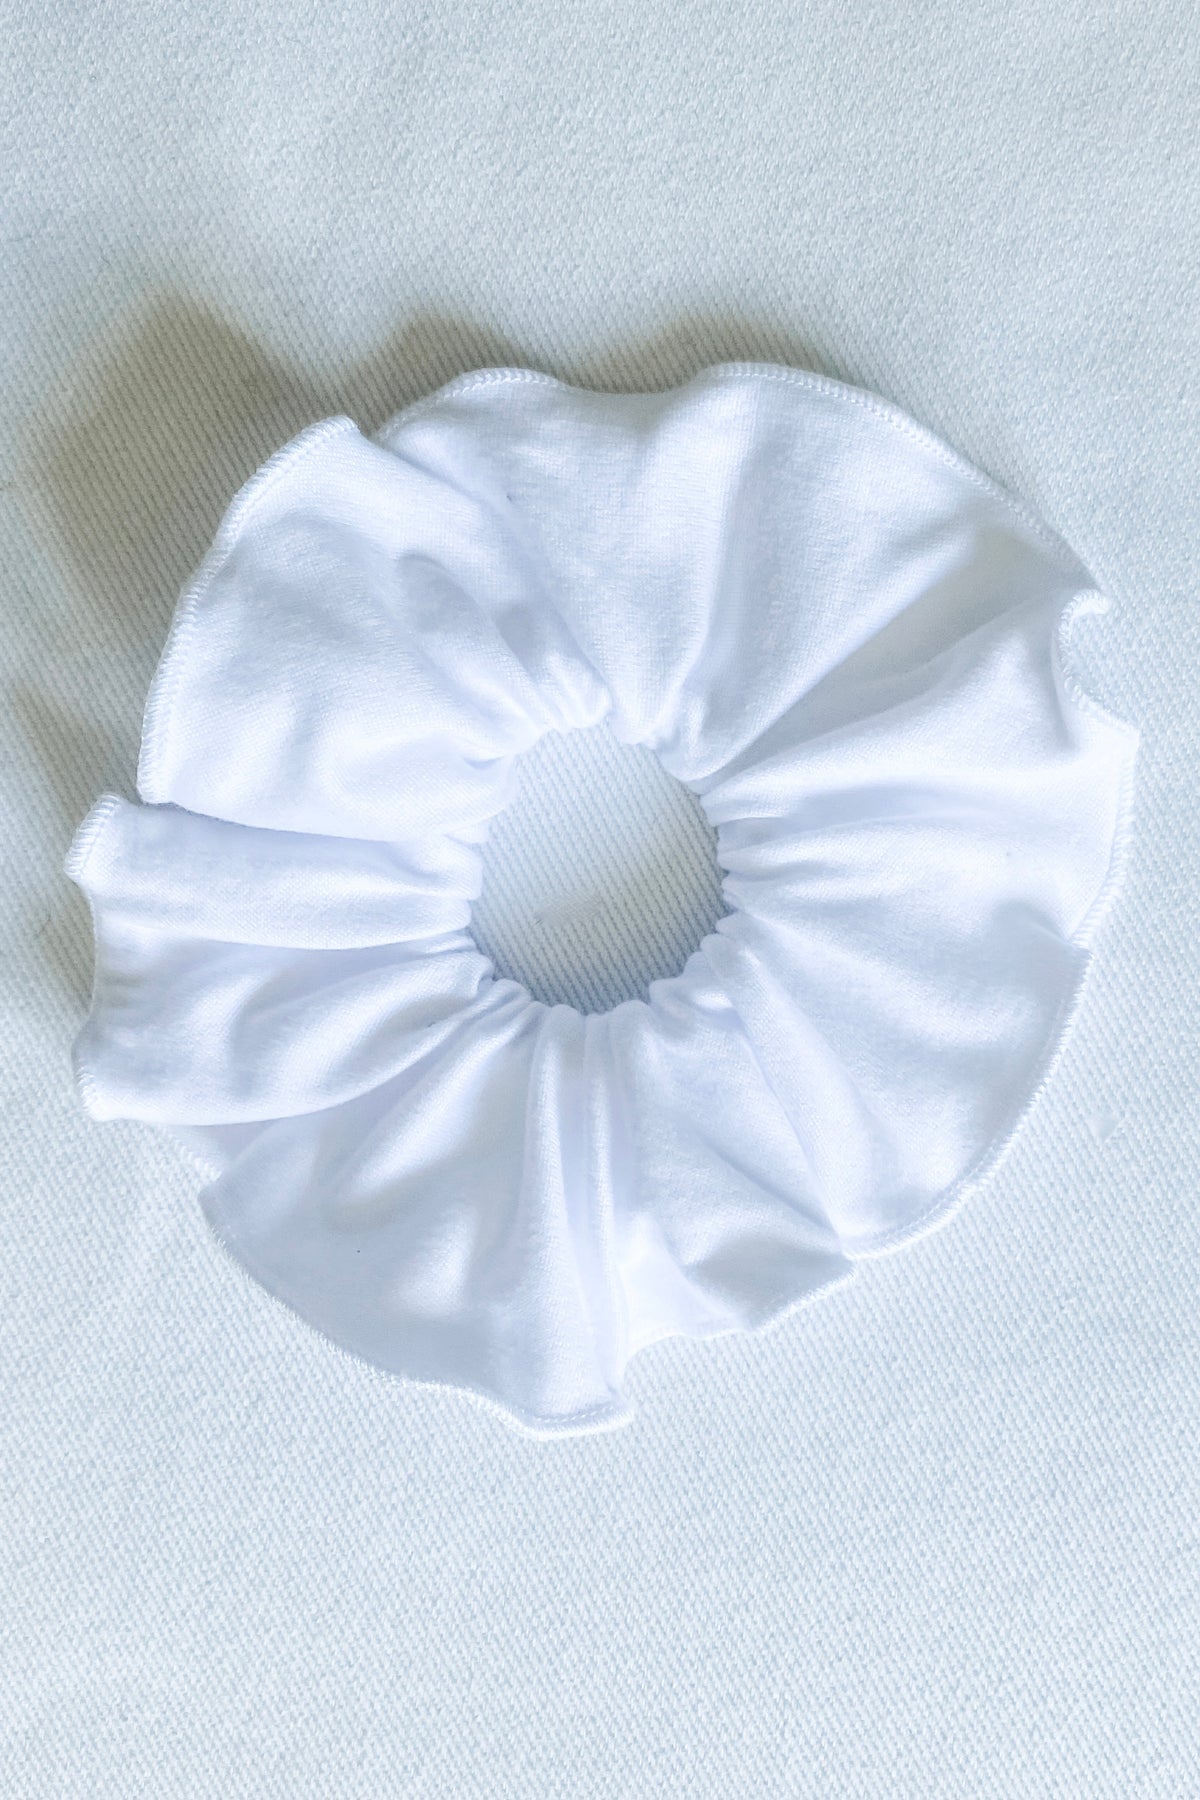 Daine Kroe - Scrunchies in Brushed Venezia (White)